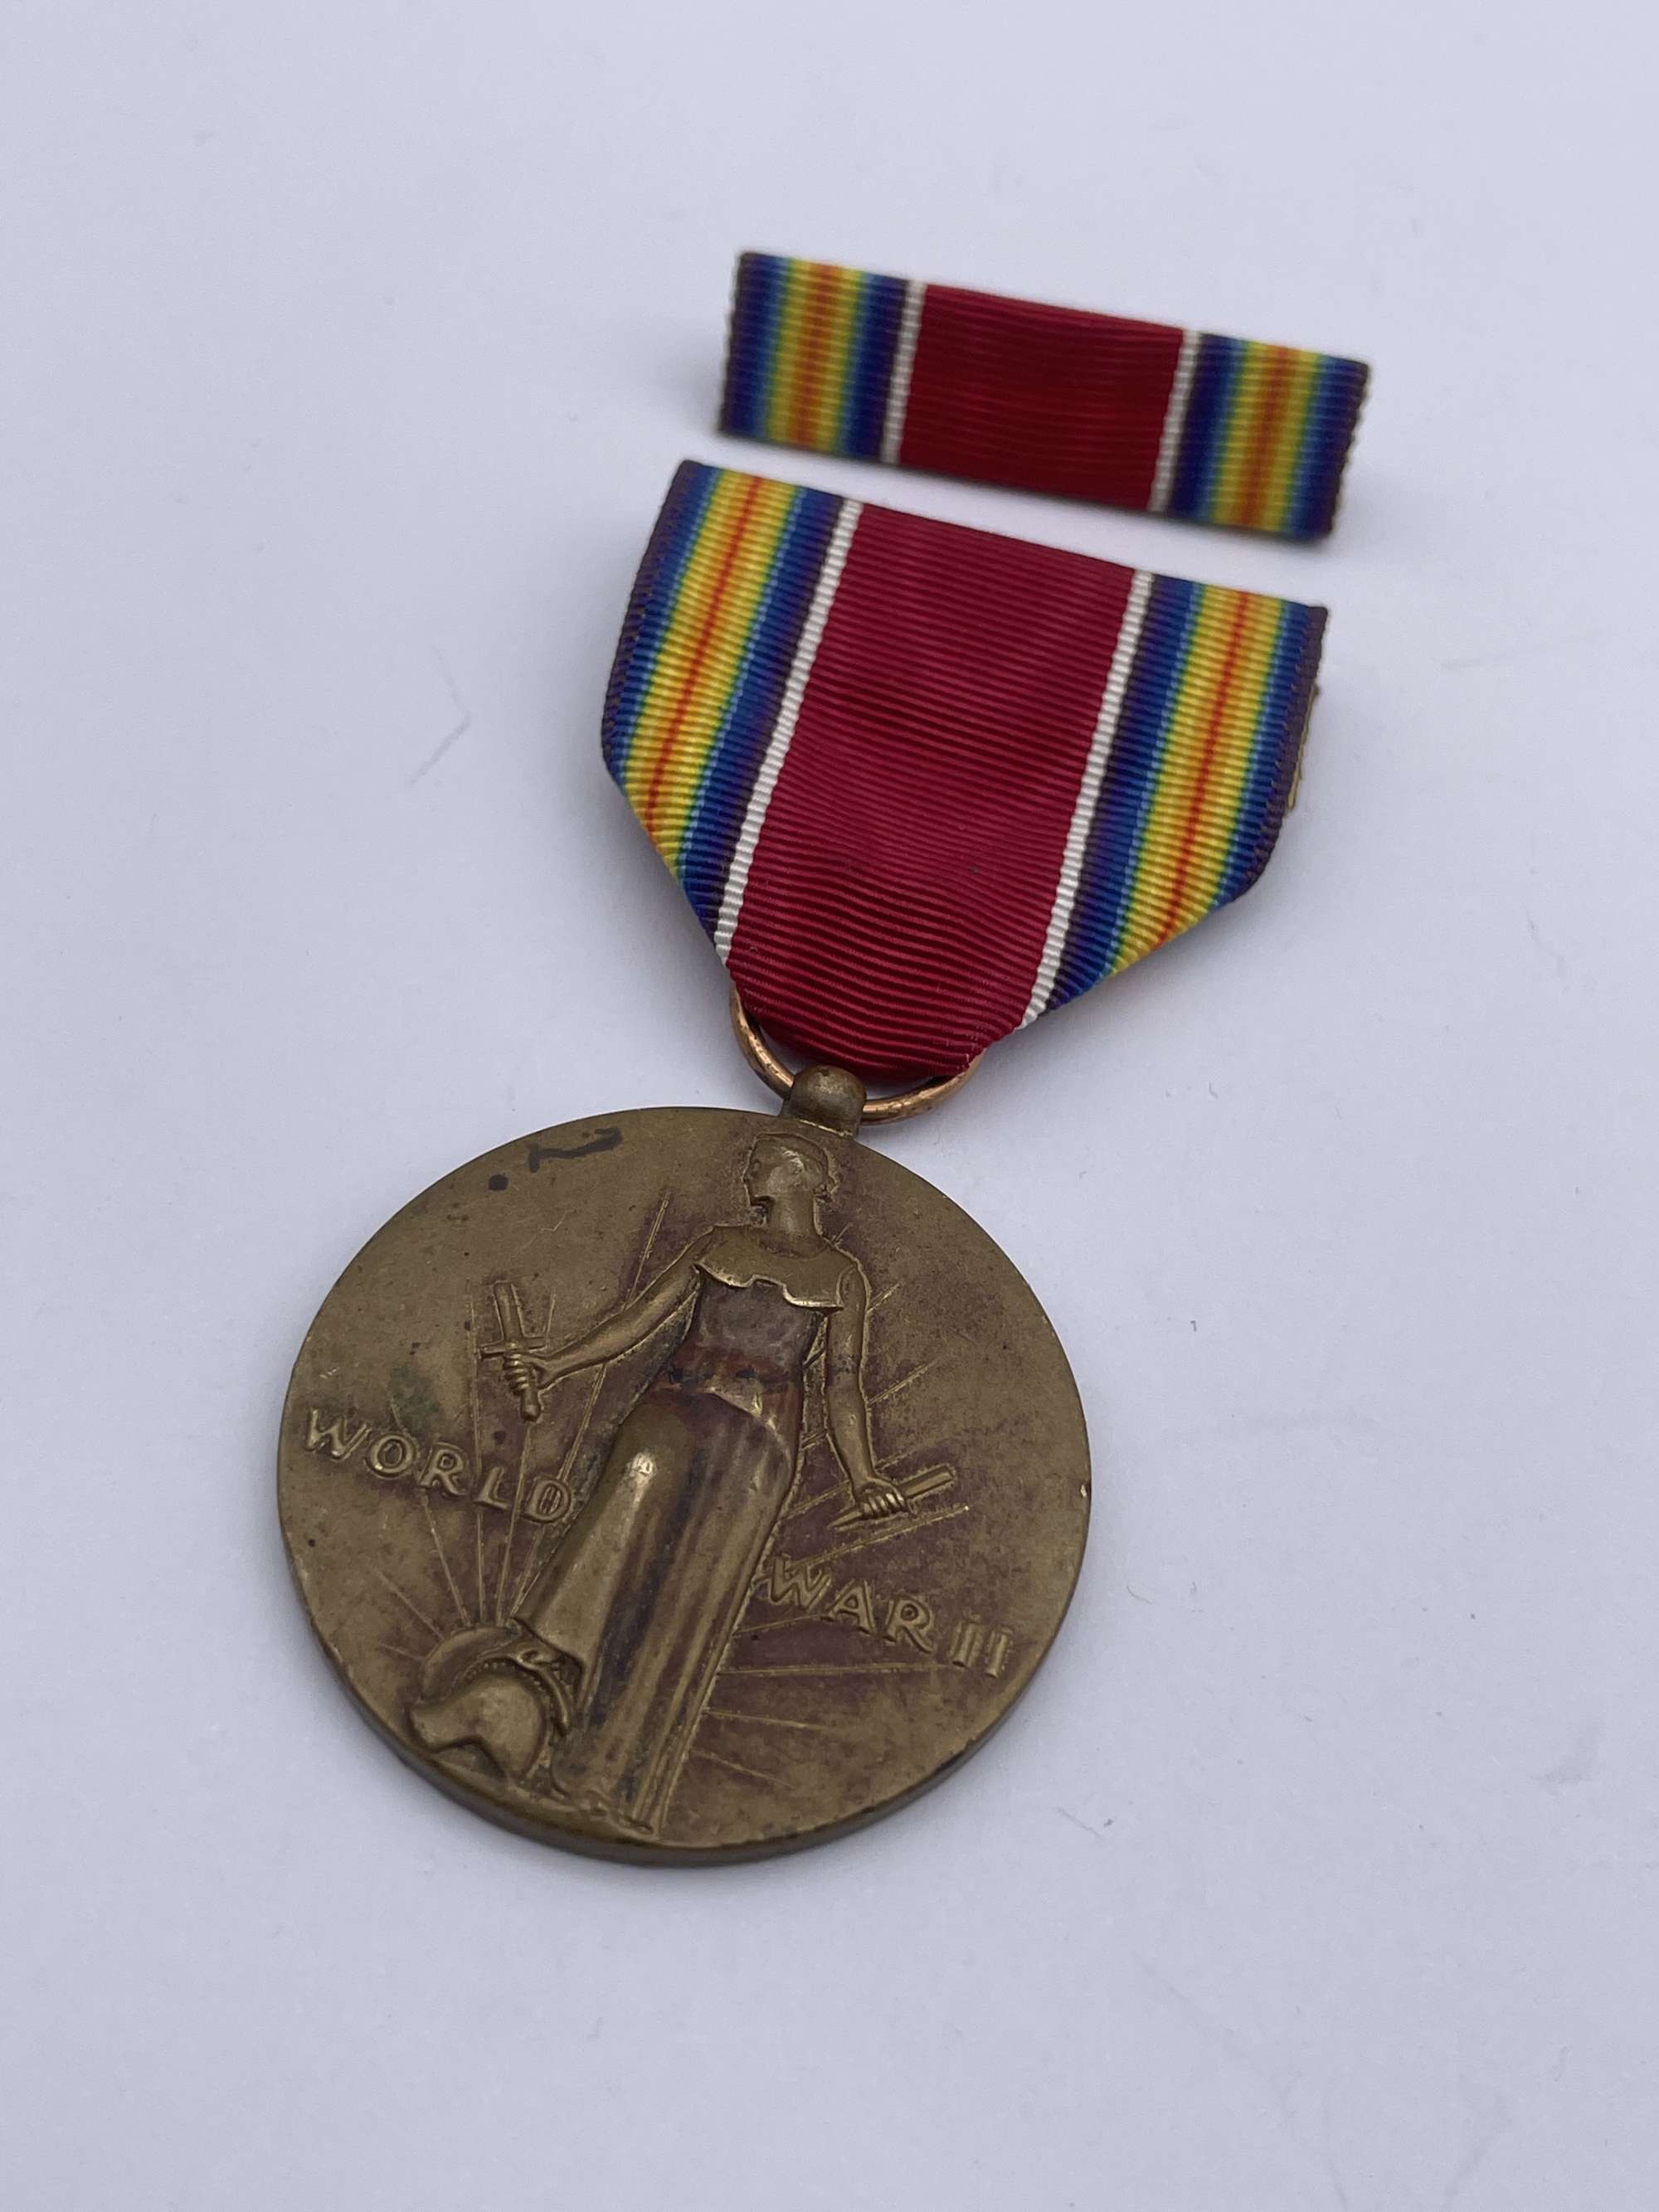 Original American World War II Victory Medal with Bar